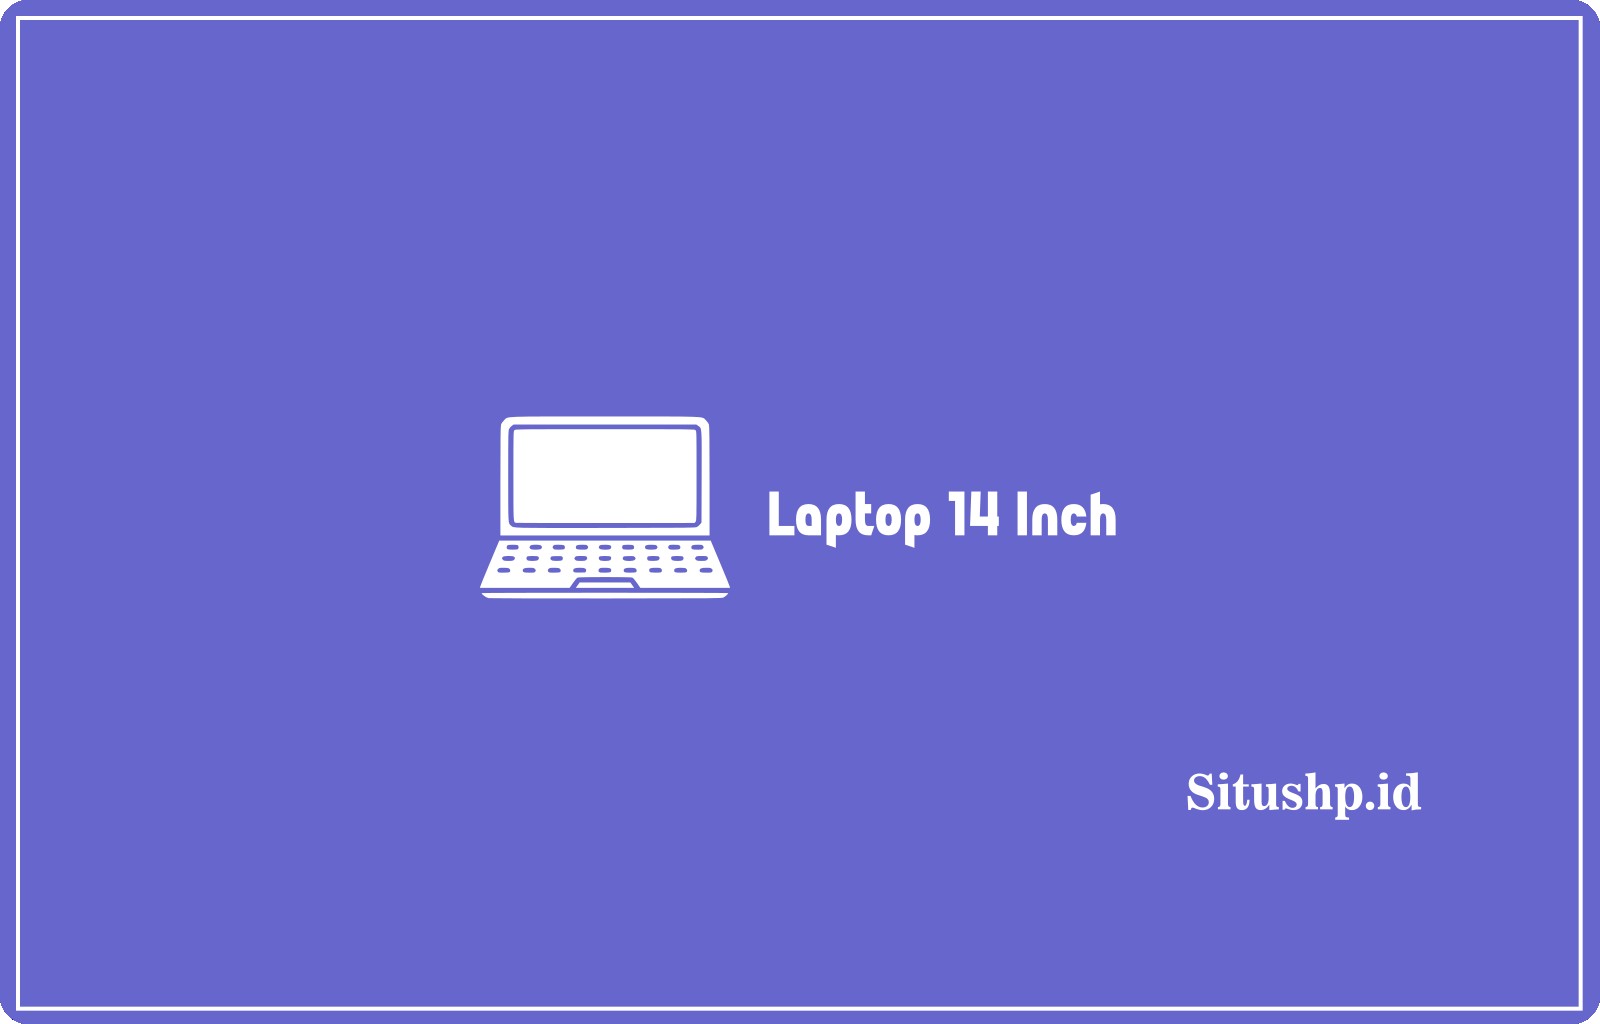 Laptop 14 Inch